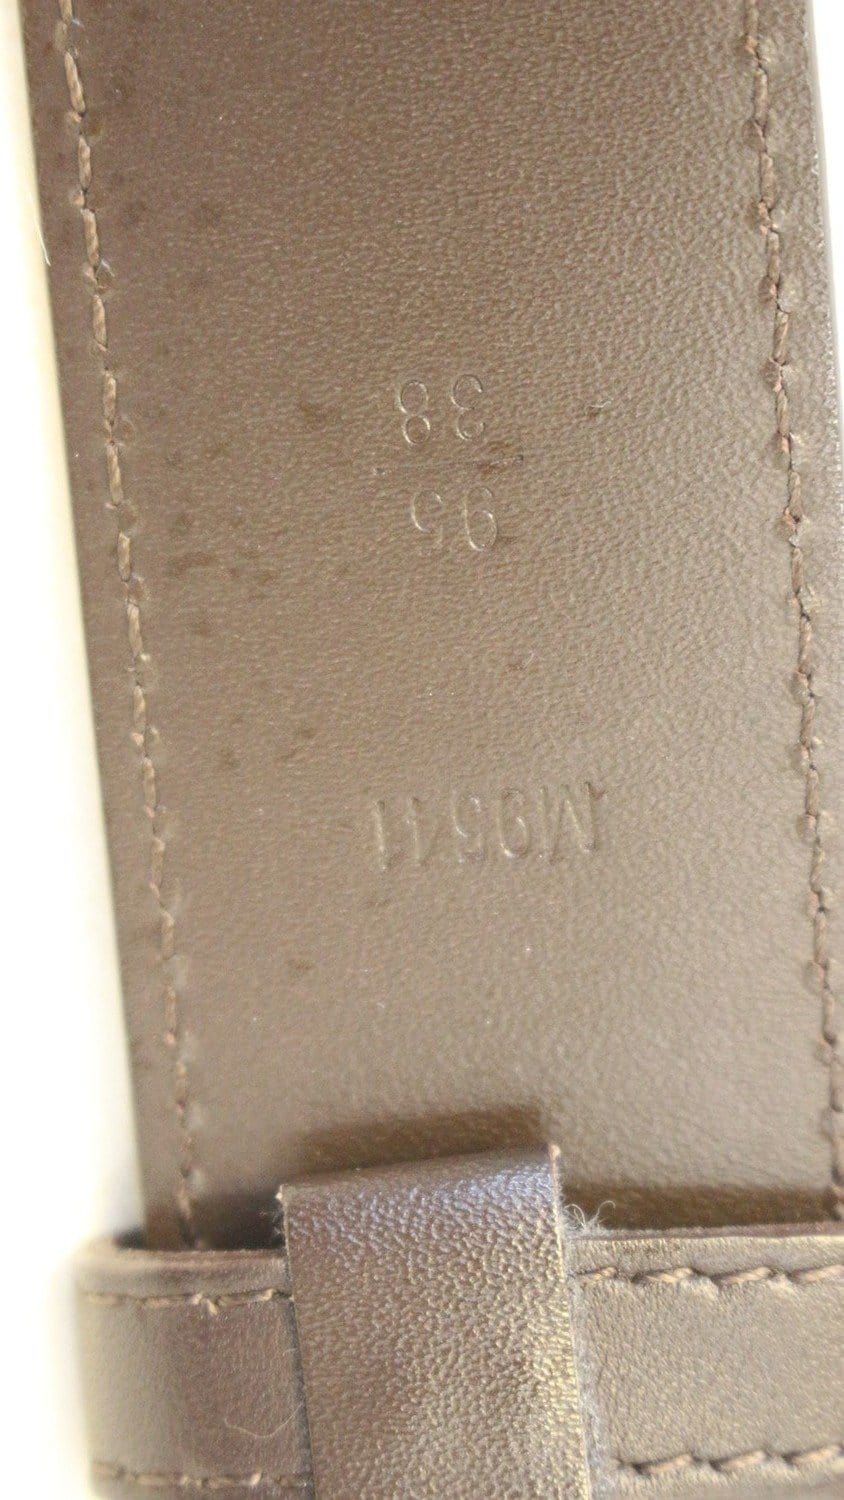 100% Authentic Brand New Louis Vuitton Belt - Size 95/38 for Sale